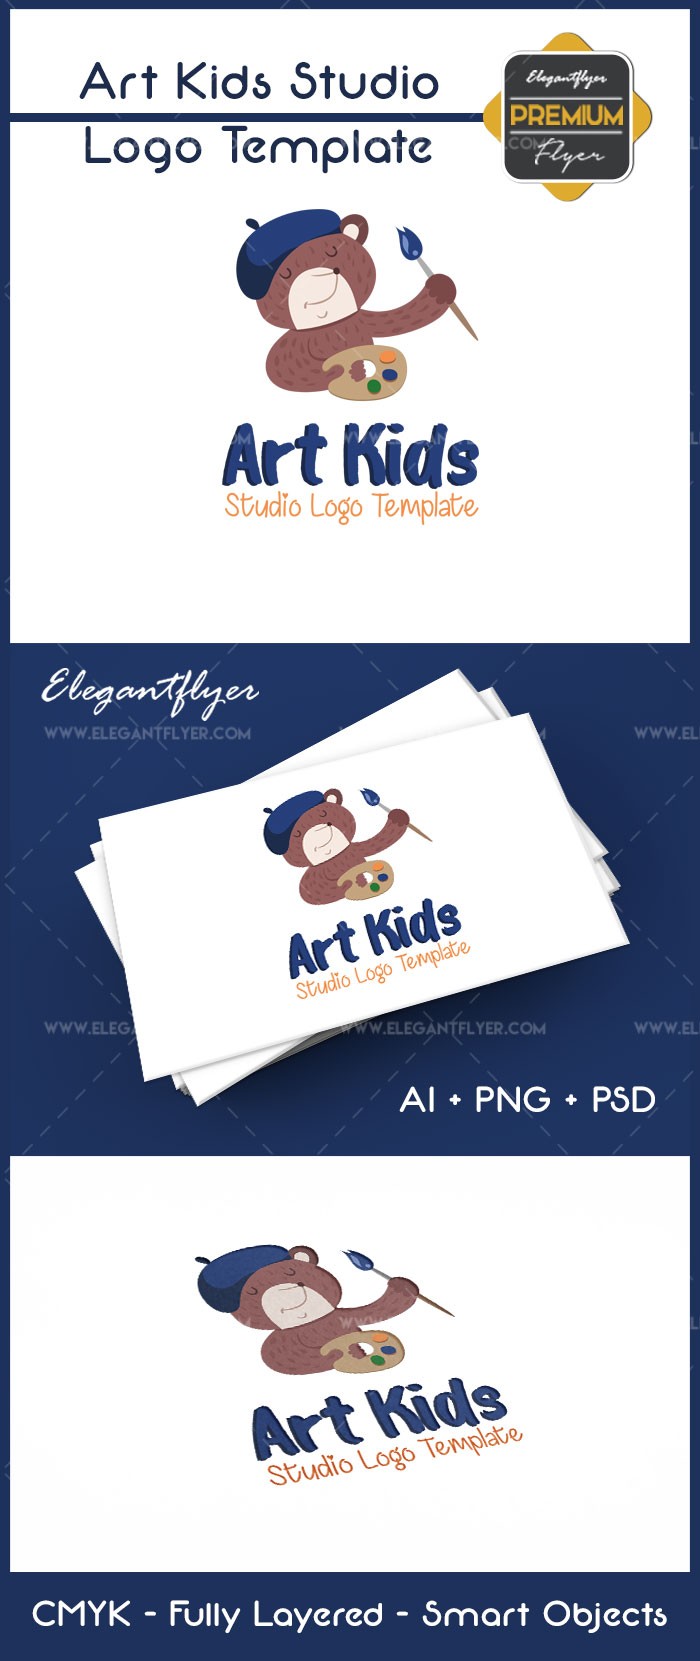 Art Kids Studio. by ElegantFlyer